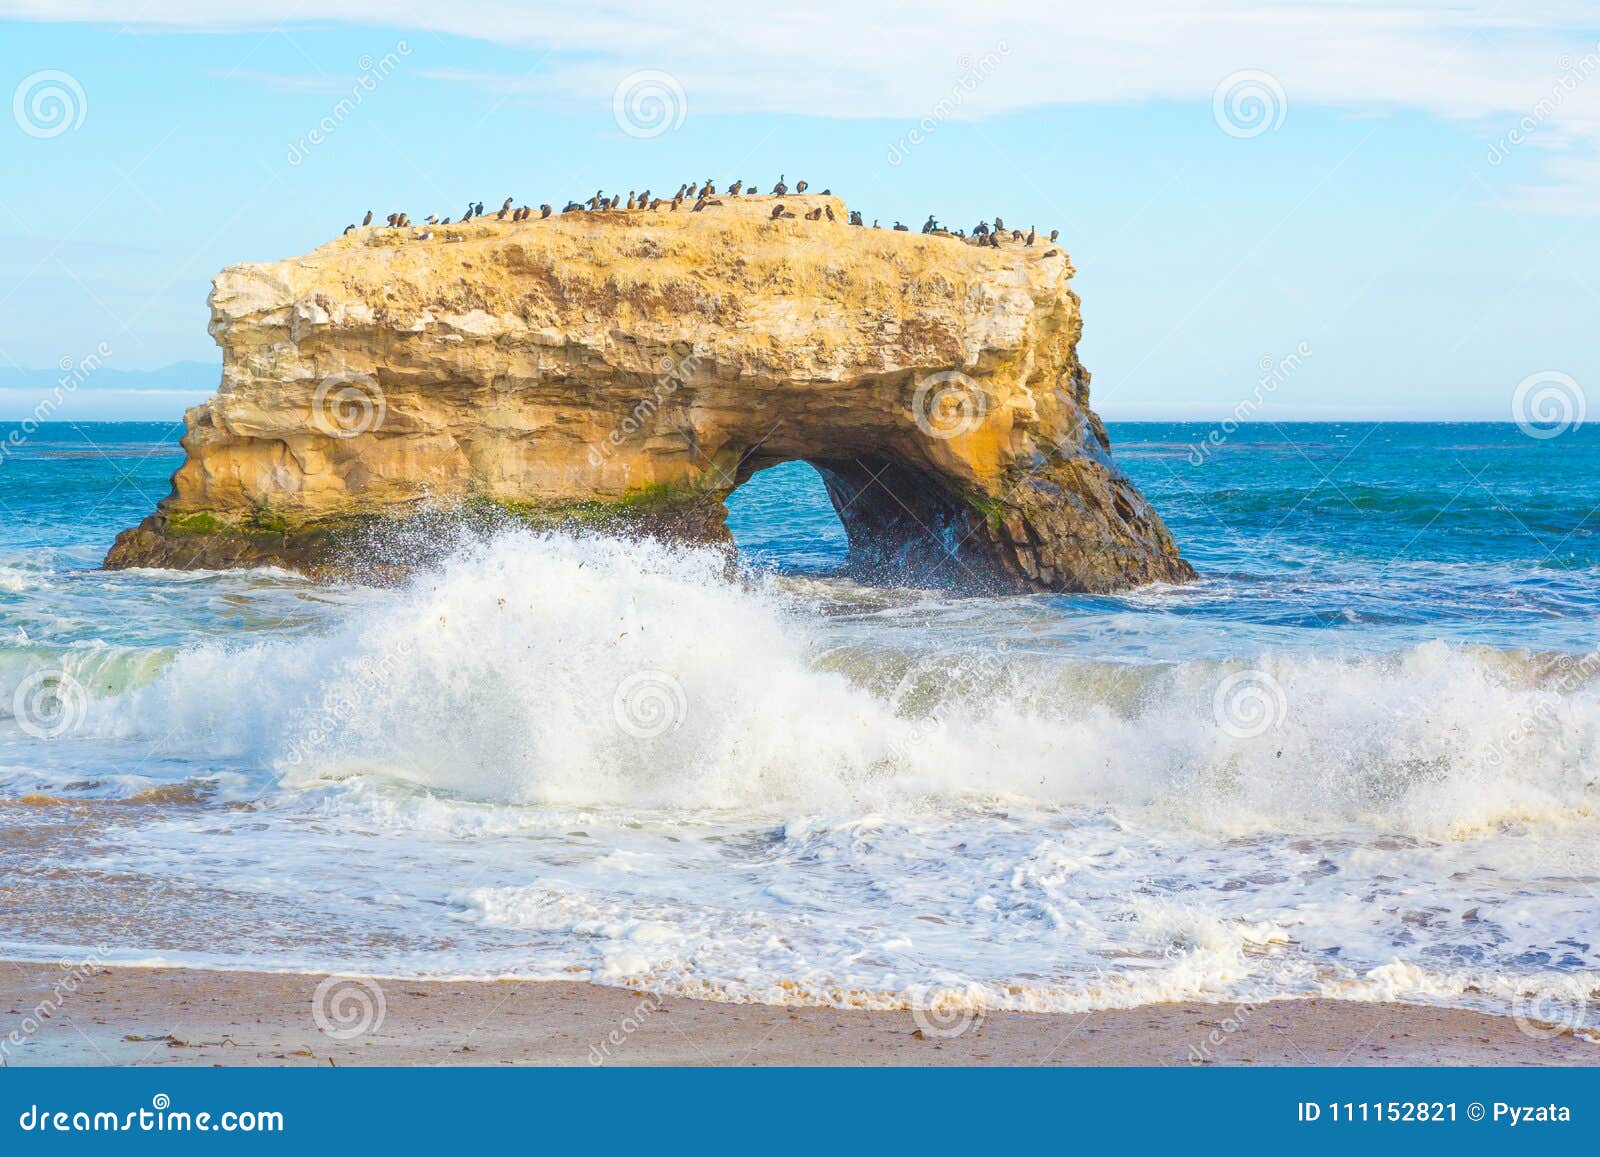 natural arch rock in santa cruz, california